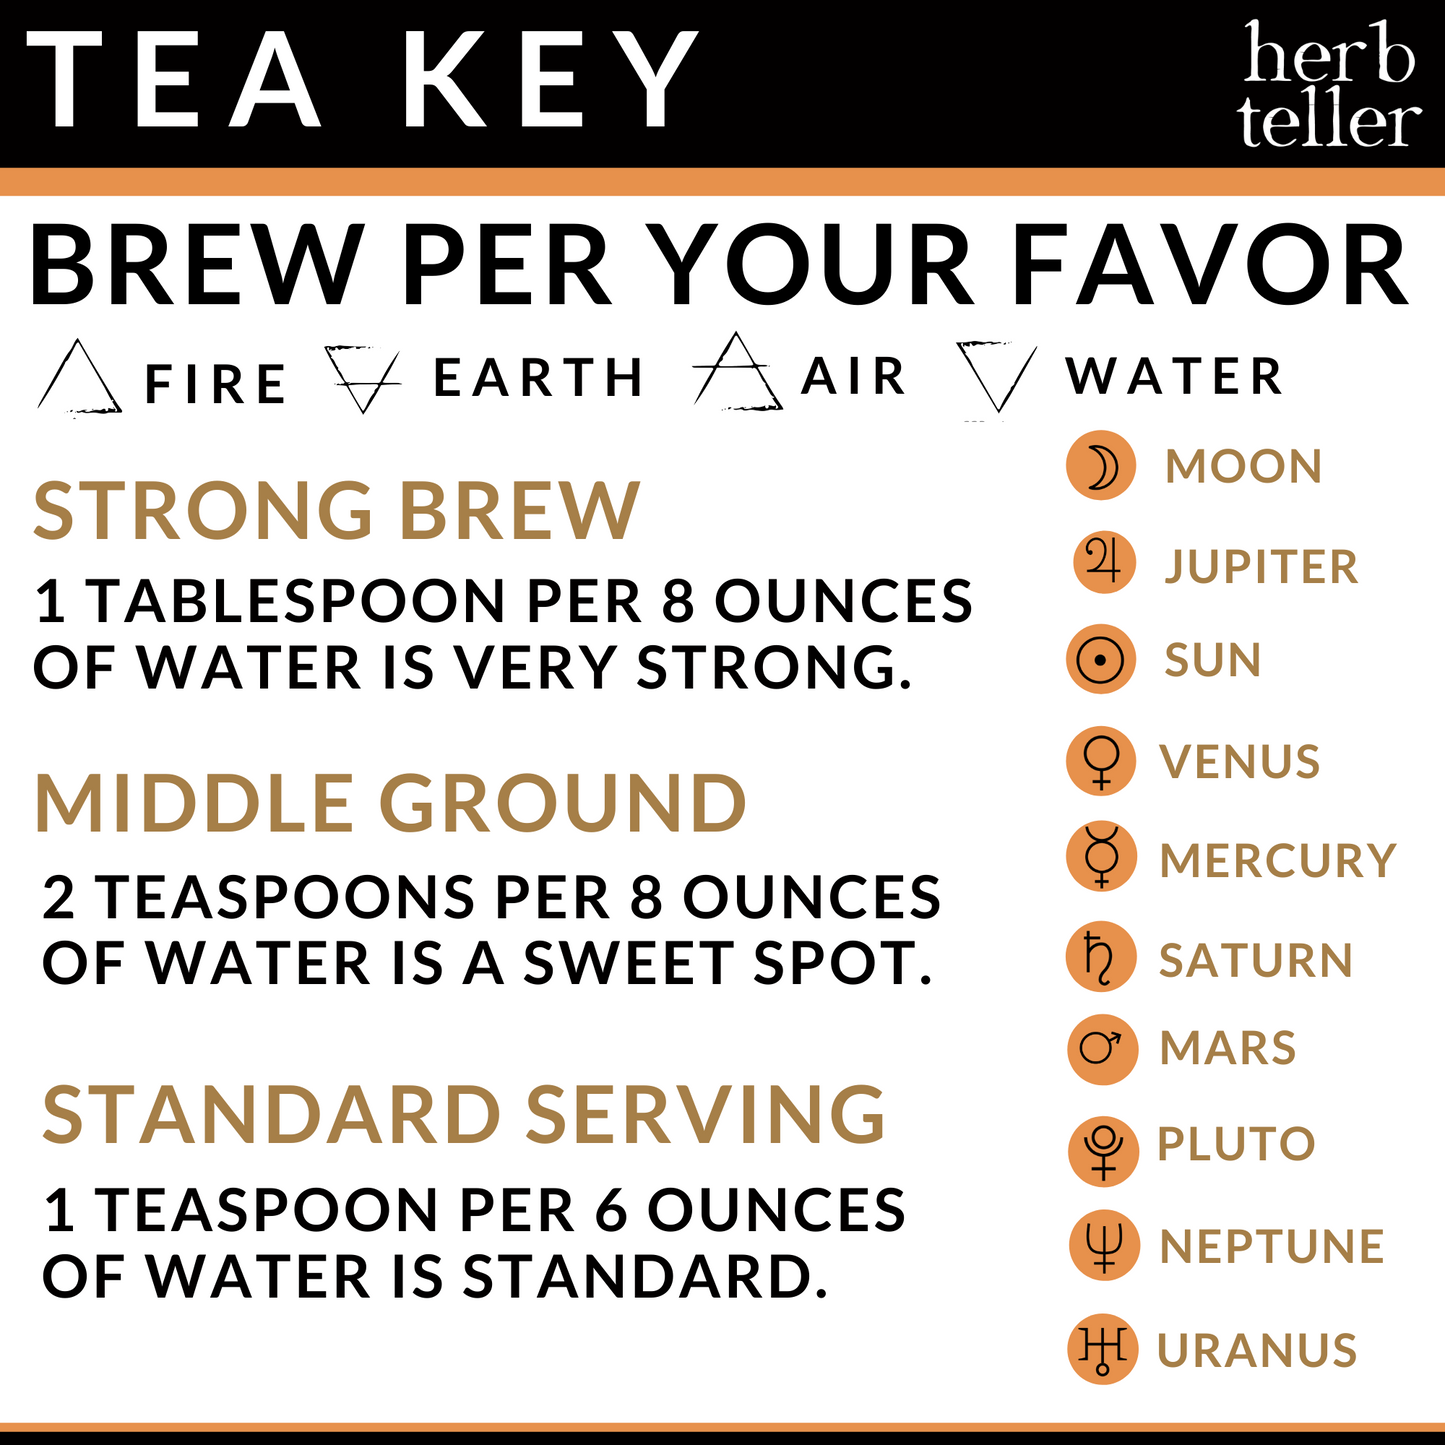 Juno's Joy Herbal Tea/Infusion